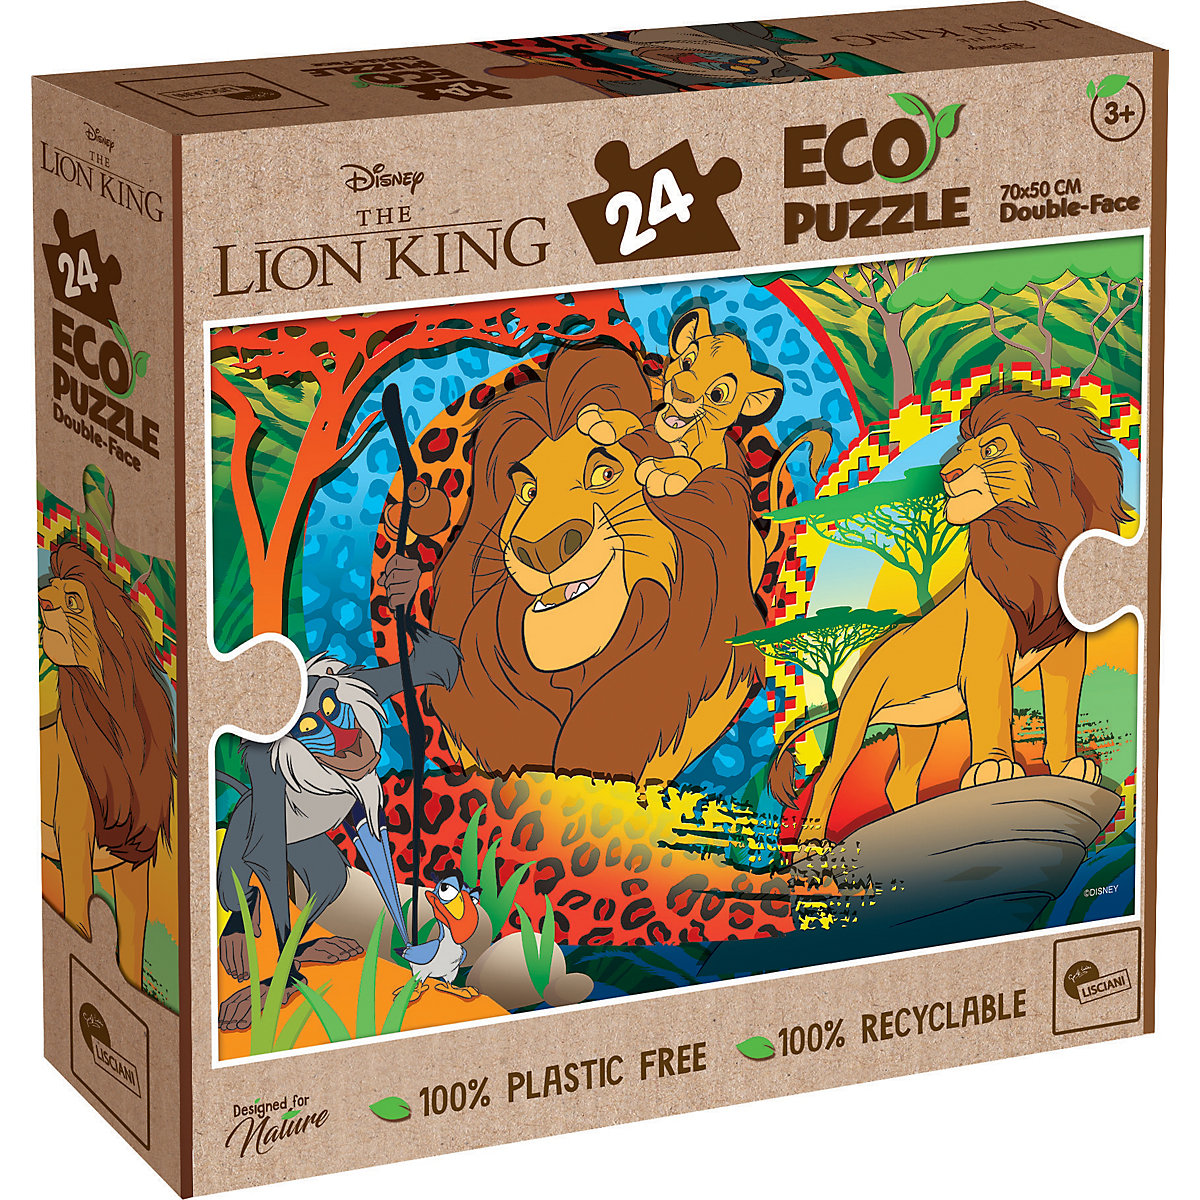 Eco-Puzzle Disney König der Löwen 24 Teile 70 x 50 cm doppelseitig